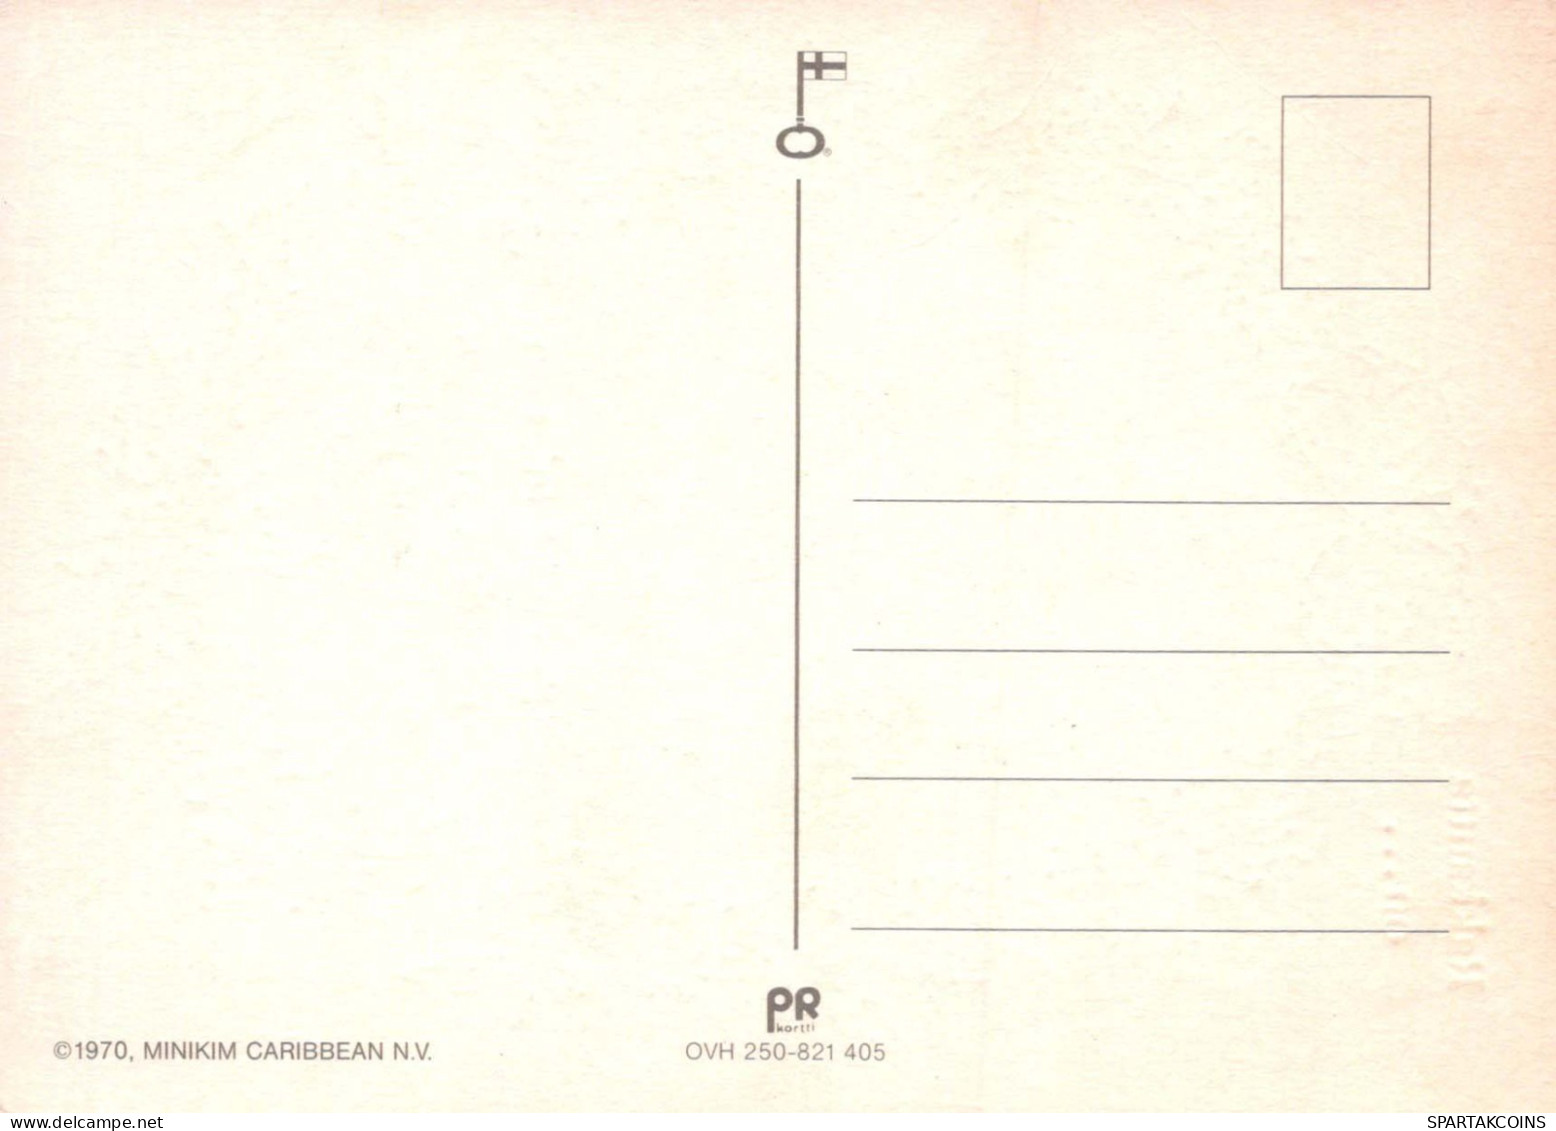 NIÑOS HUMOR Vintage Tarjeta Postal CPSM #PBV423.ES - Cartes Humoristiques